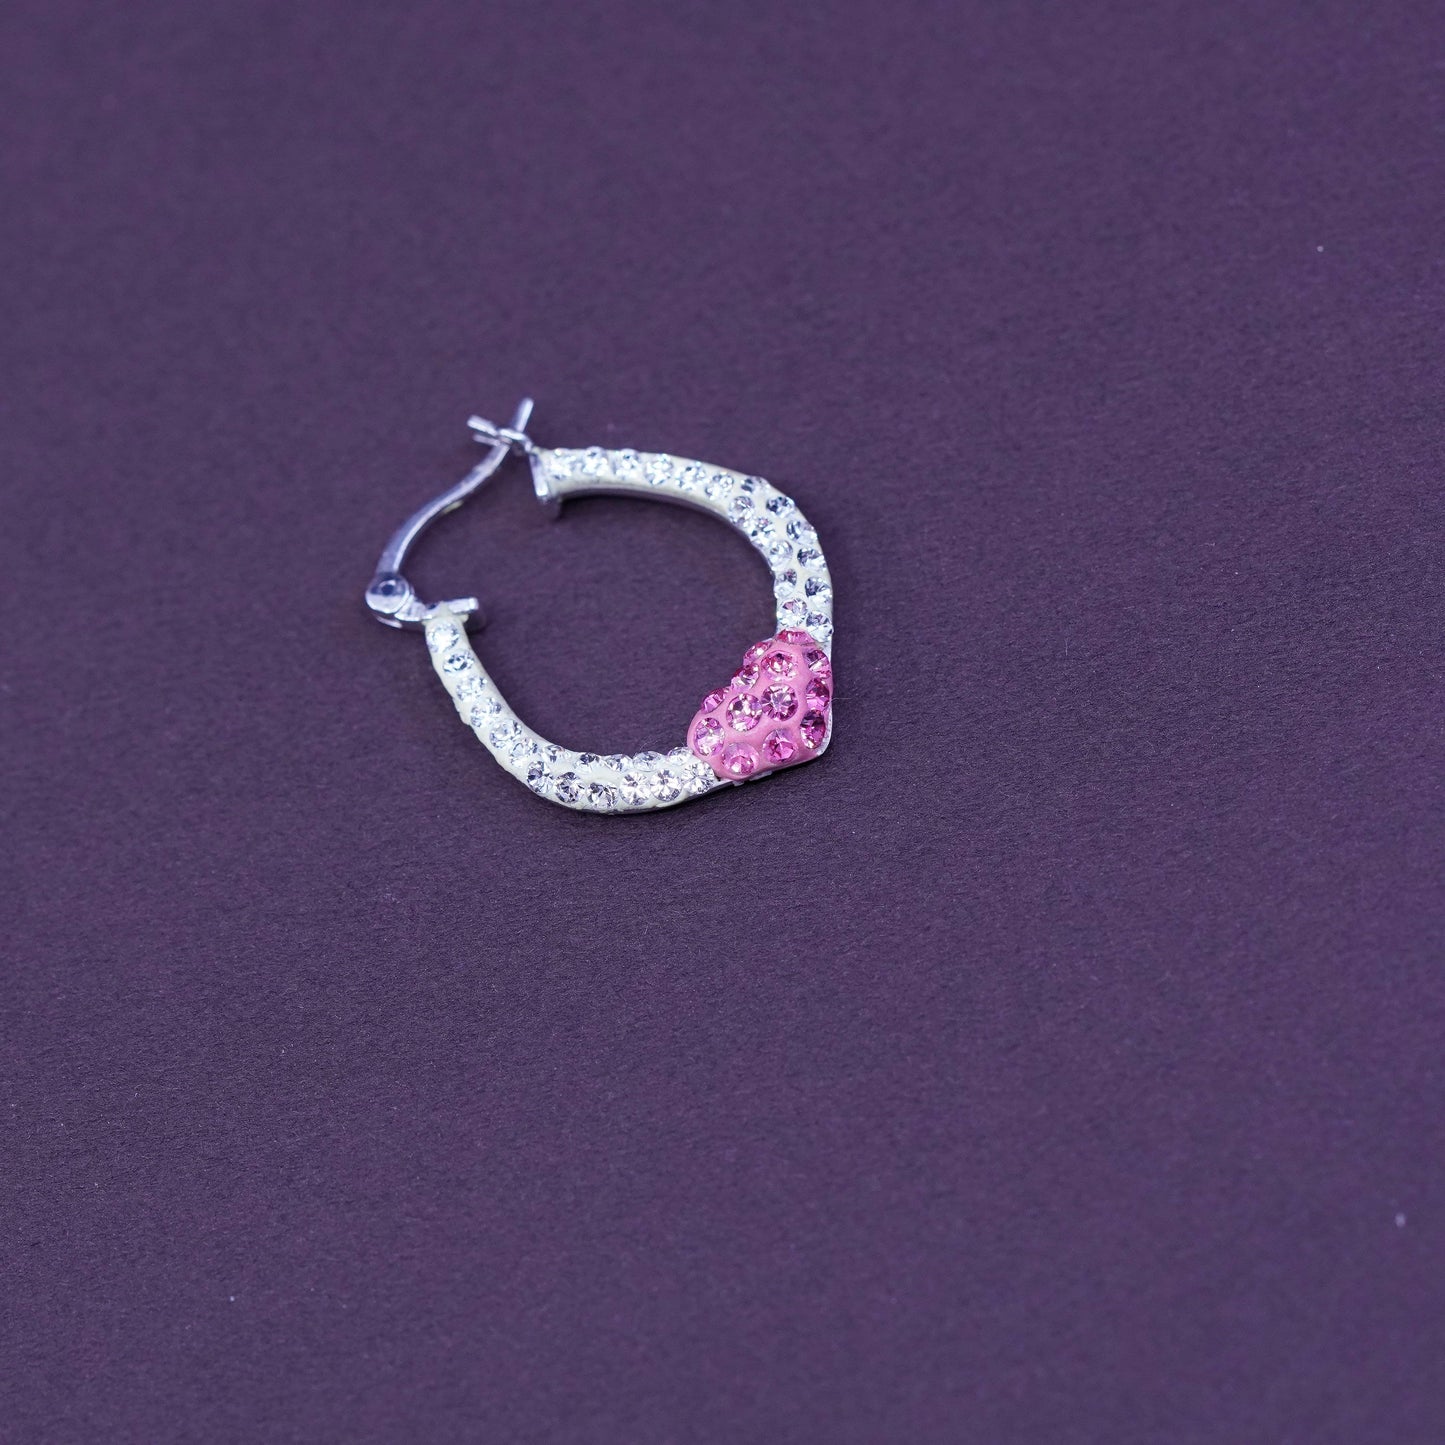 1”, AU Sterling silver handmade earrings, 925 heart hoops with cluster Crystal